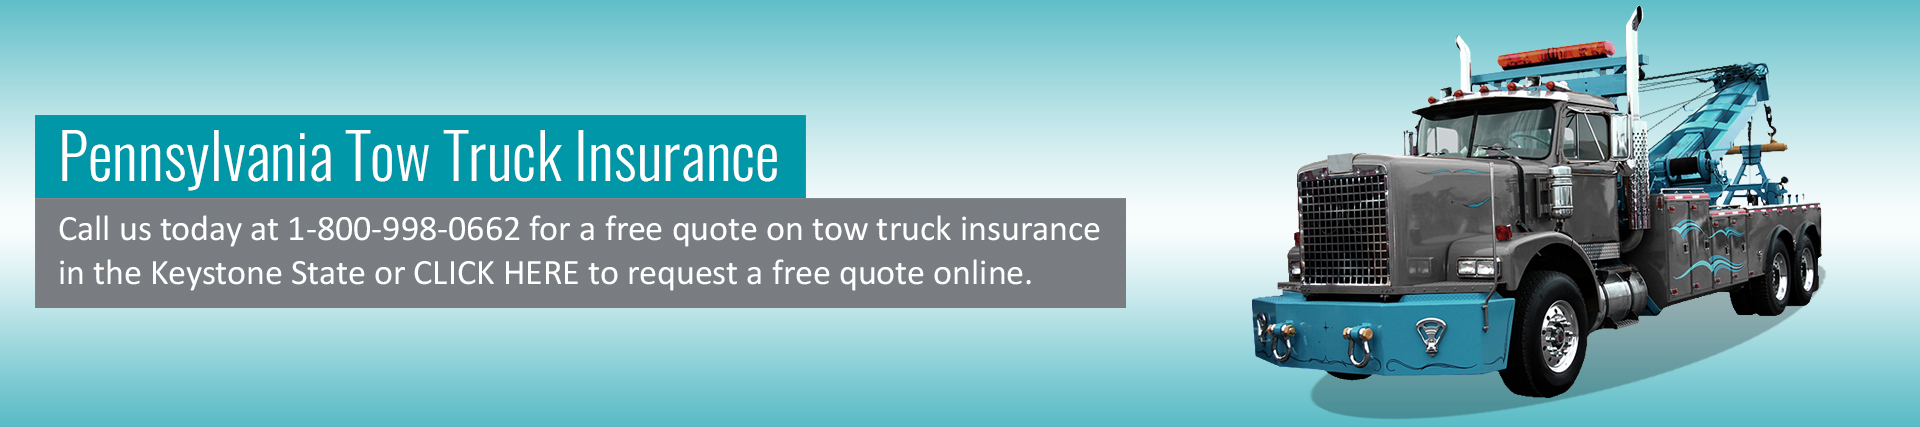 Philadelphia Tow Truck Insurance